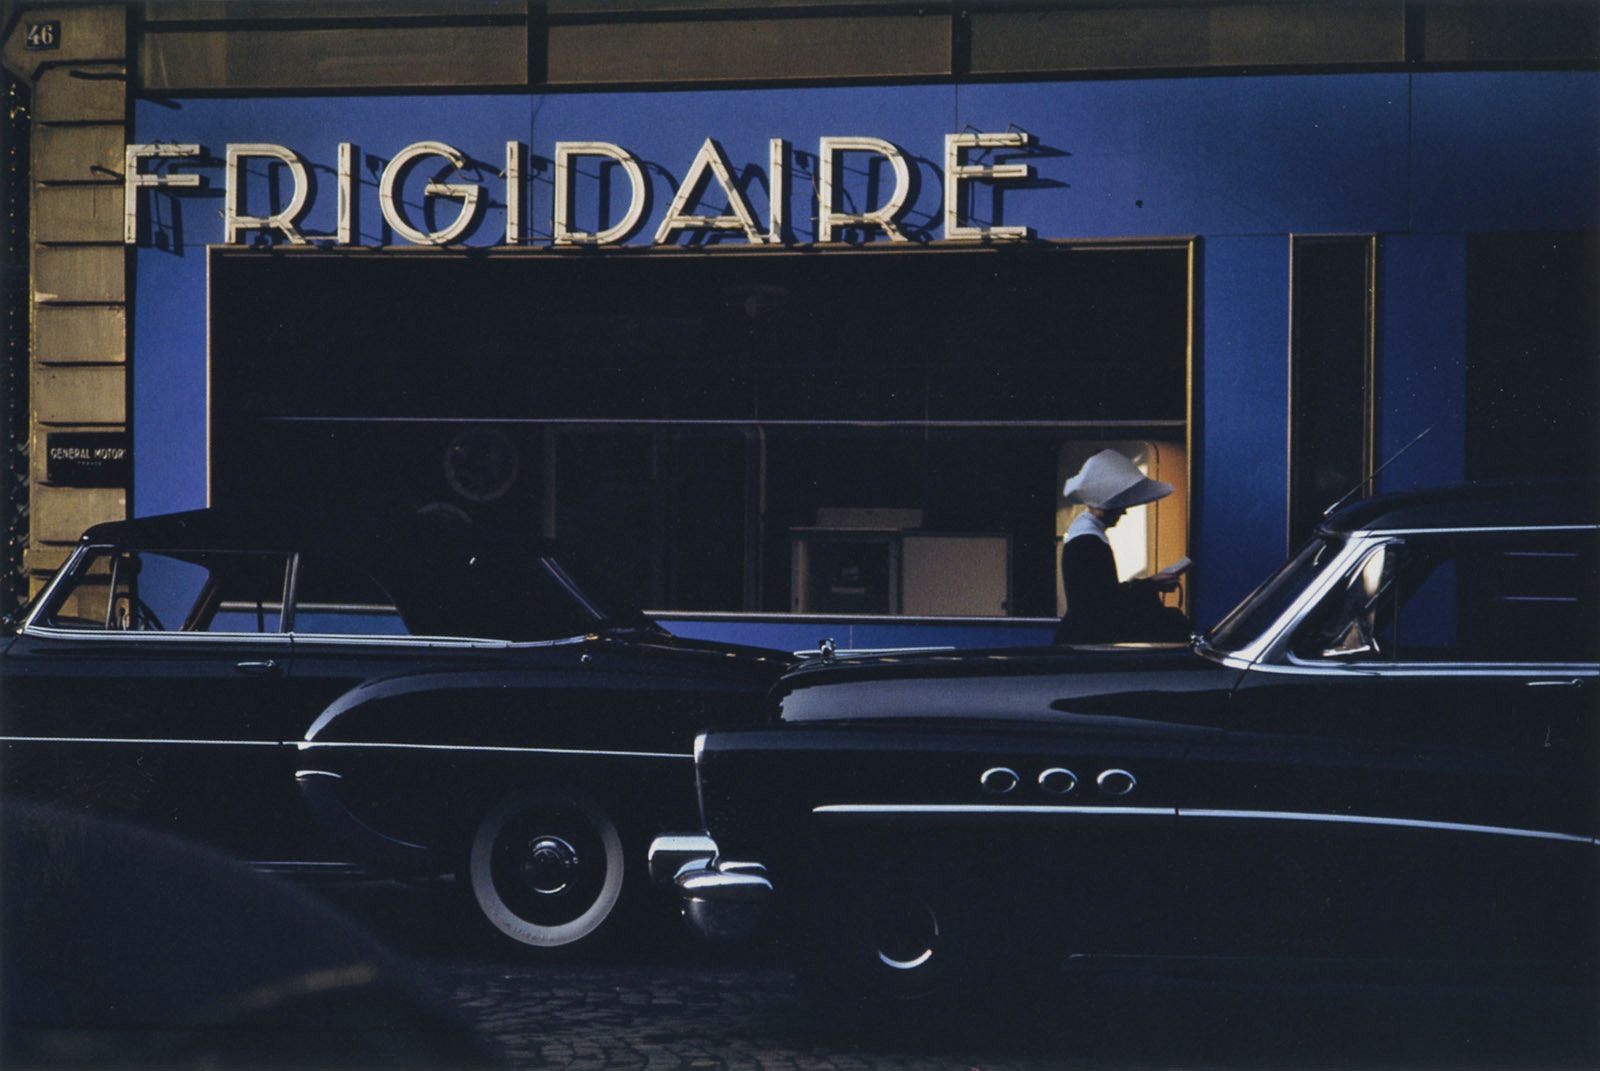 Frigidaire, Paris, 1954